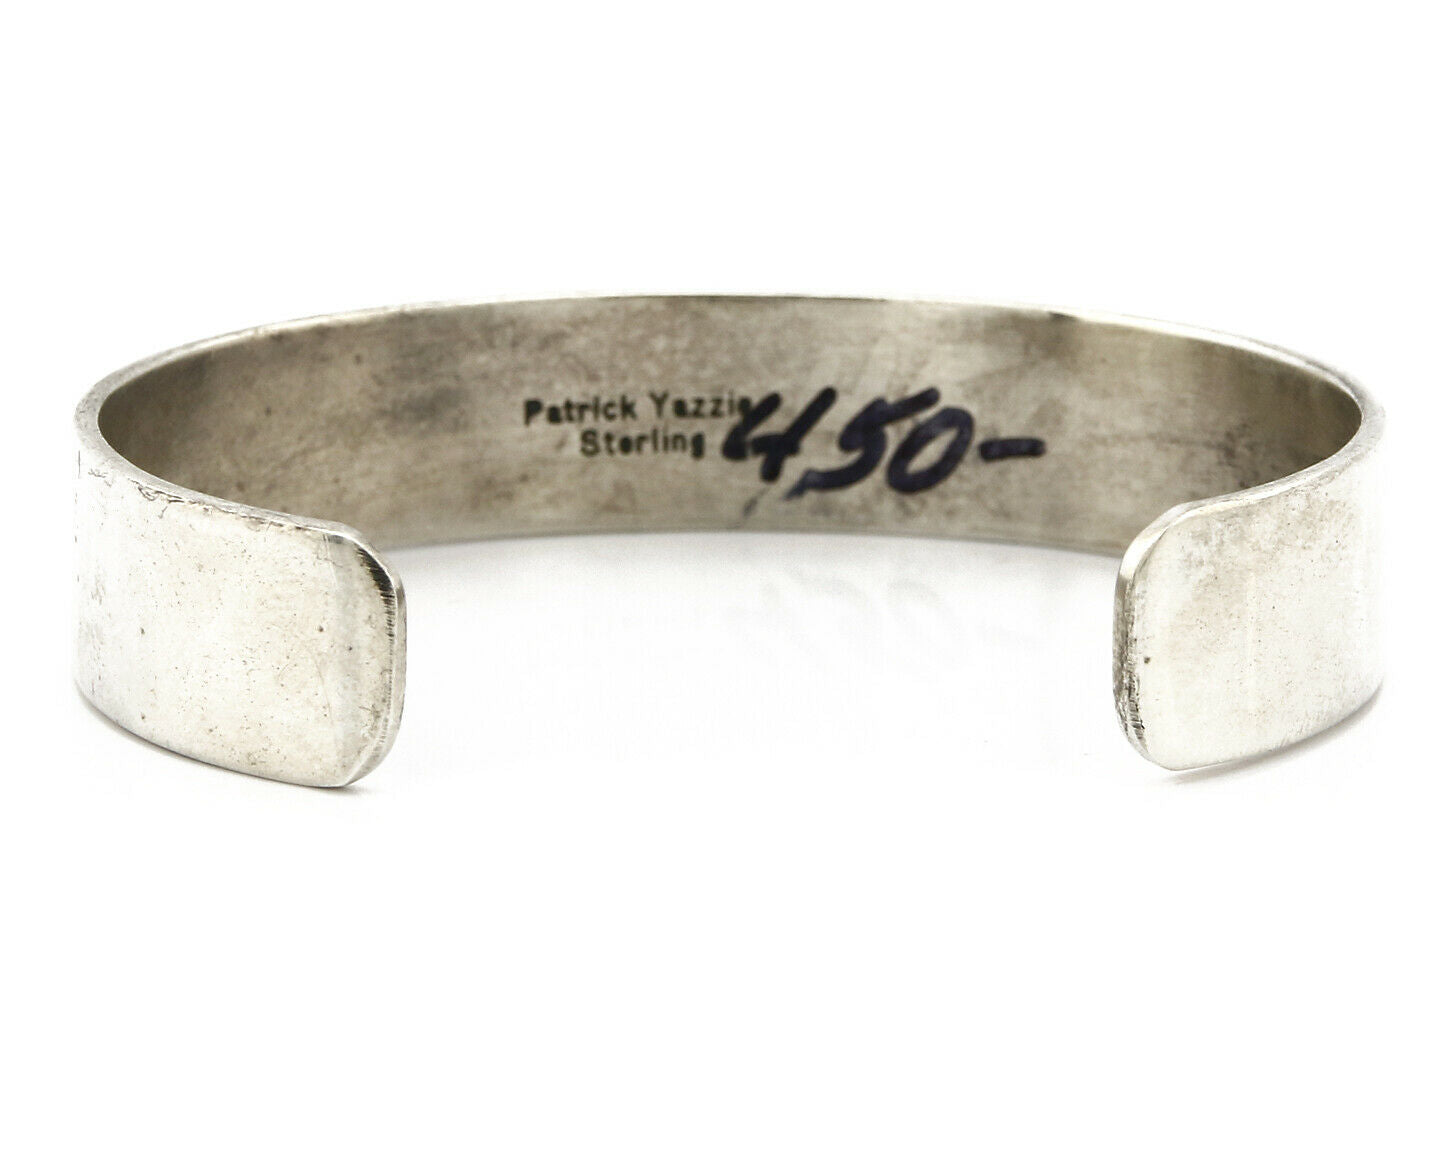 Navajo Bracelet .925 Silver Gemstone Charoite Cuff Signed Patrick Yazzie C.80's